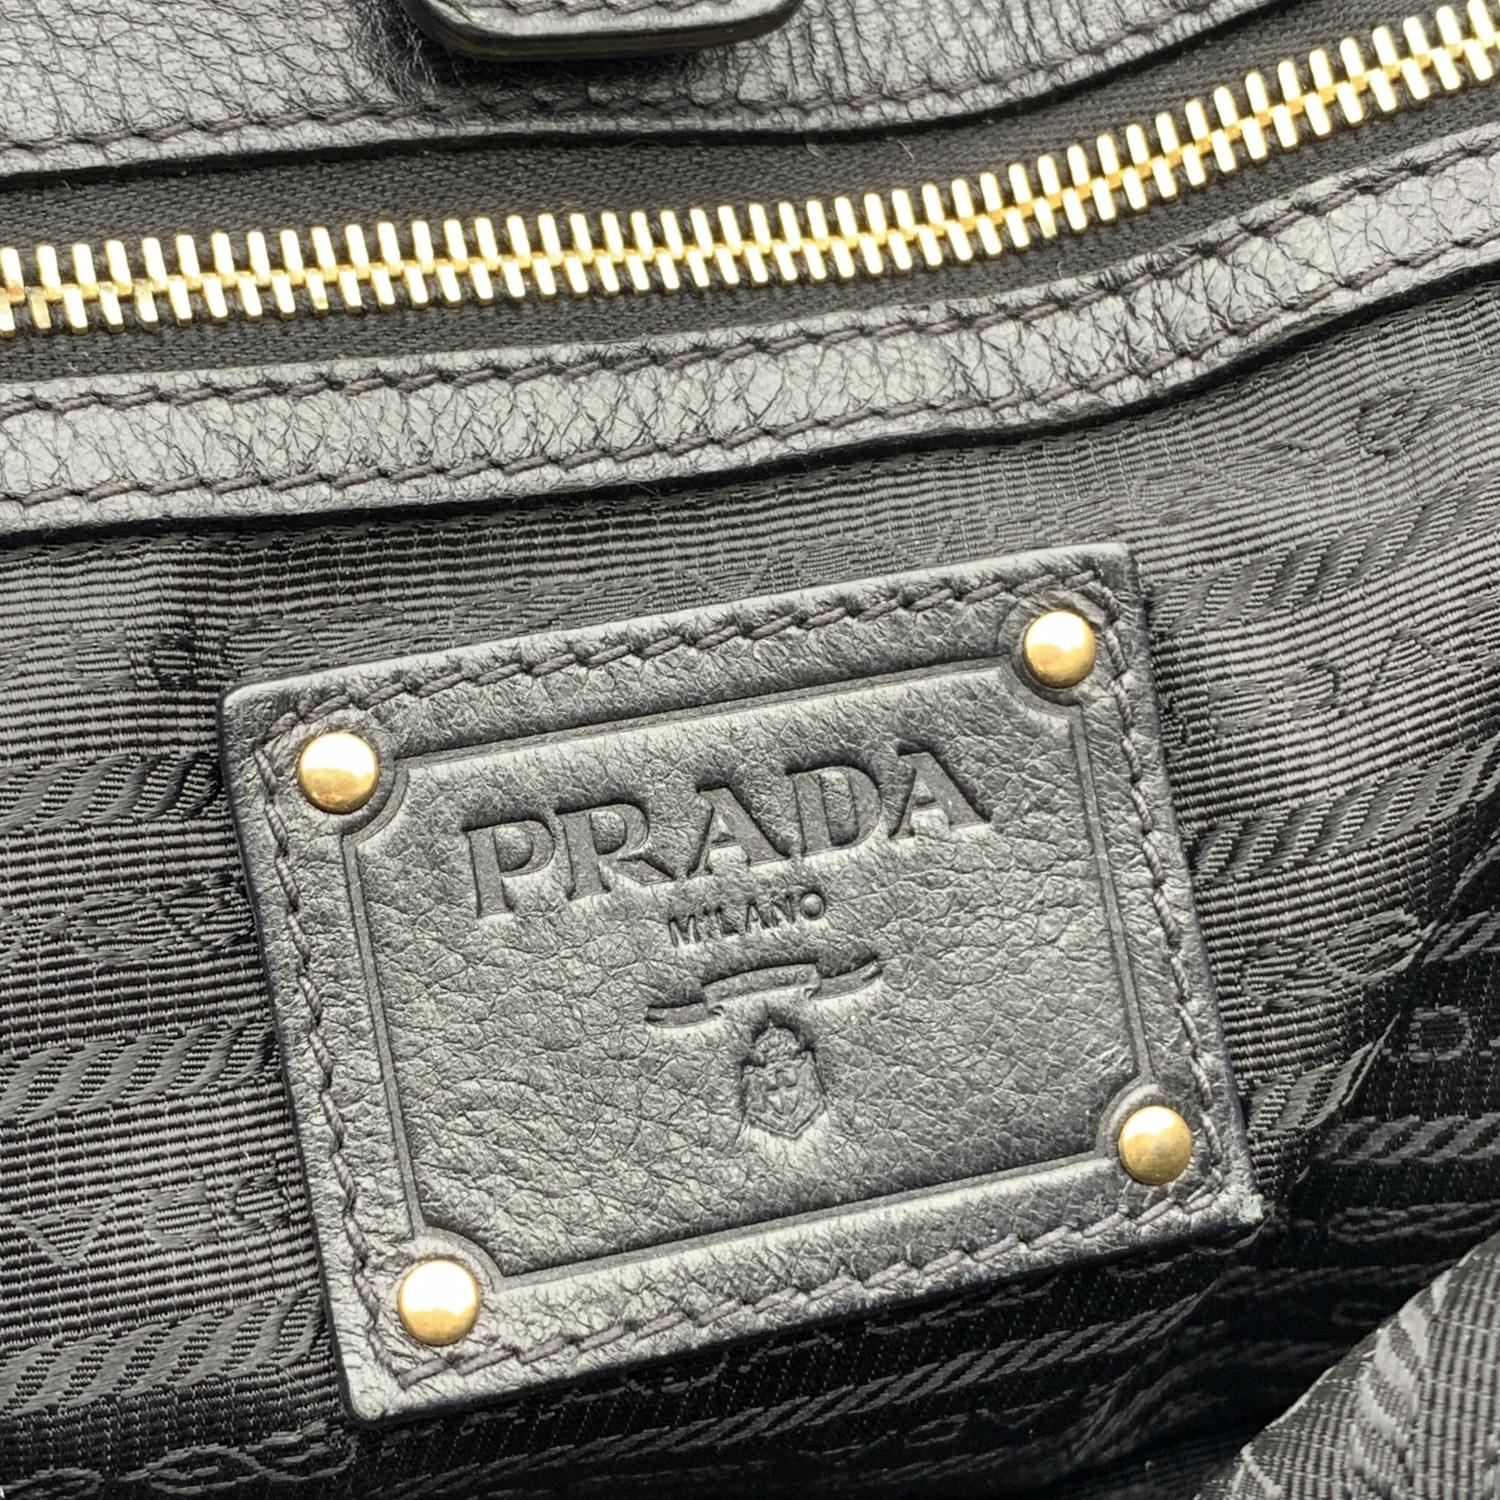 Prada Black Nylon Vela Draped Tote Handbag Shoulder Bag 3